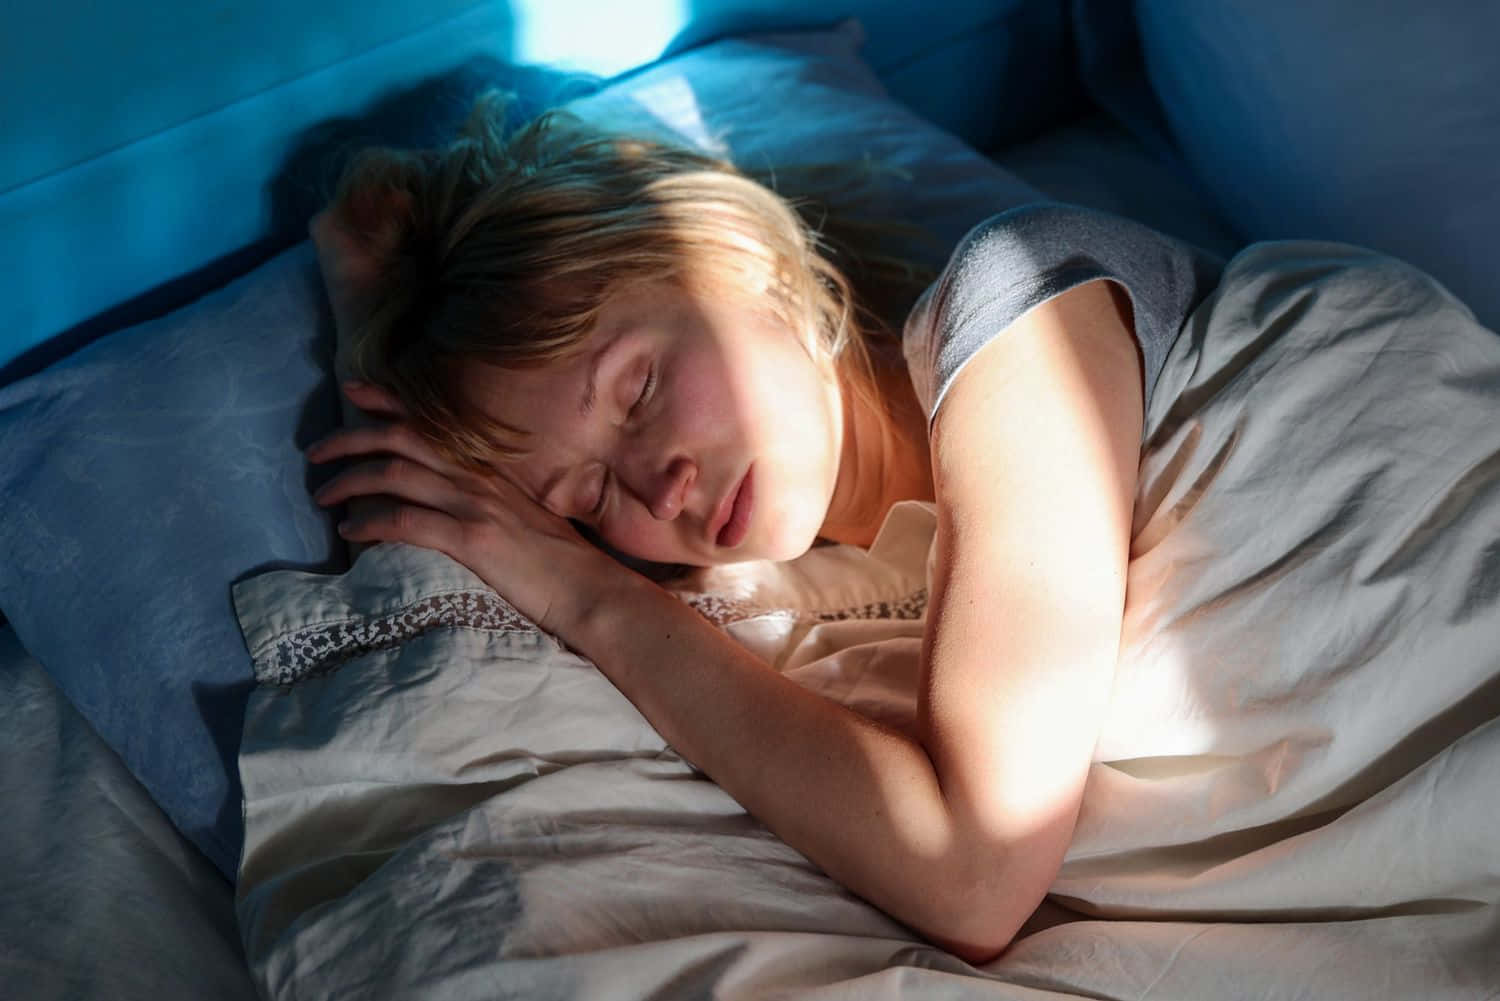 Real sleeping mom. Real Sleep. Sleep Hormone. The Effect of Sleep on a person. Stealth Sleep research.